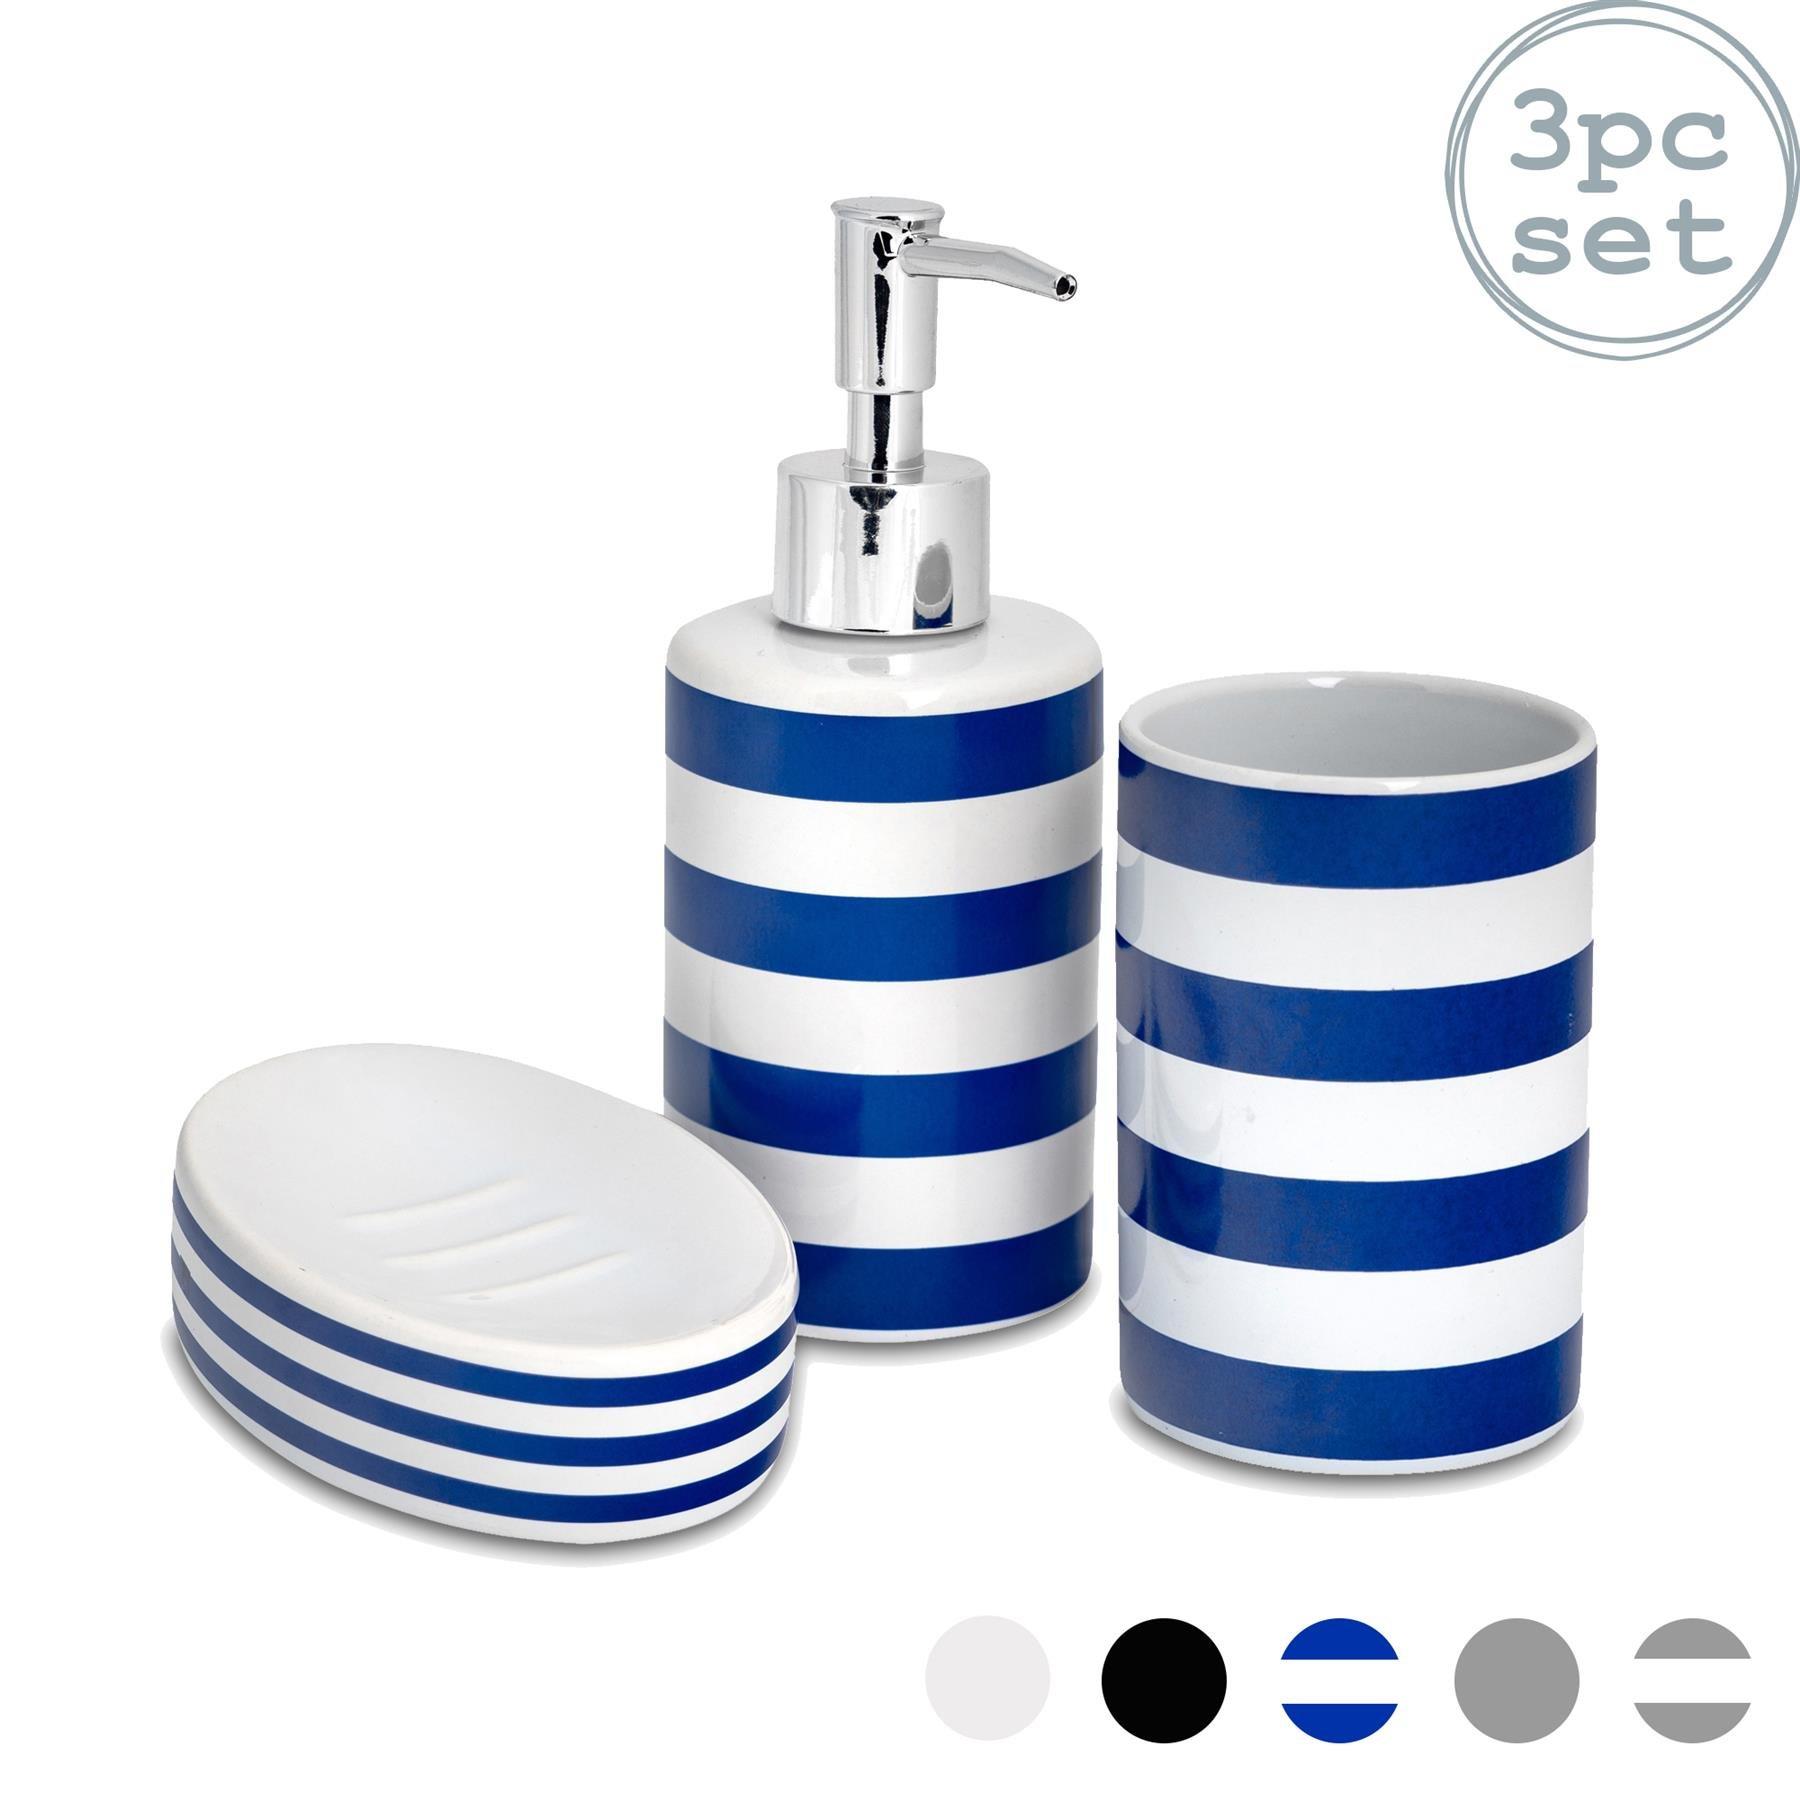 3 Piece Bathroom Accessories Set blue